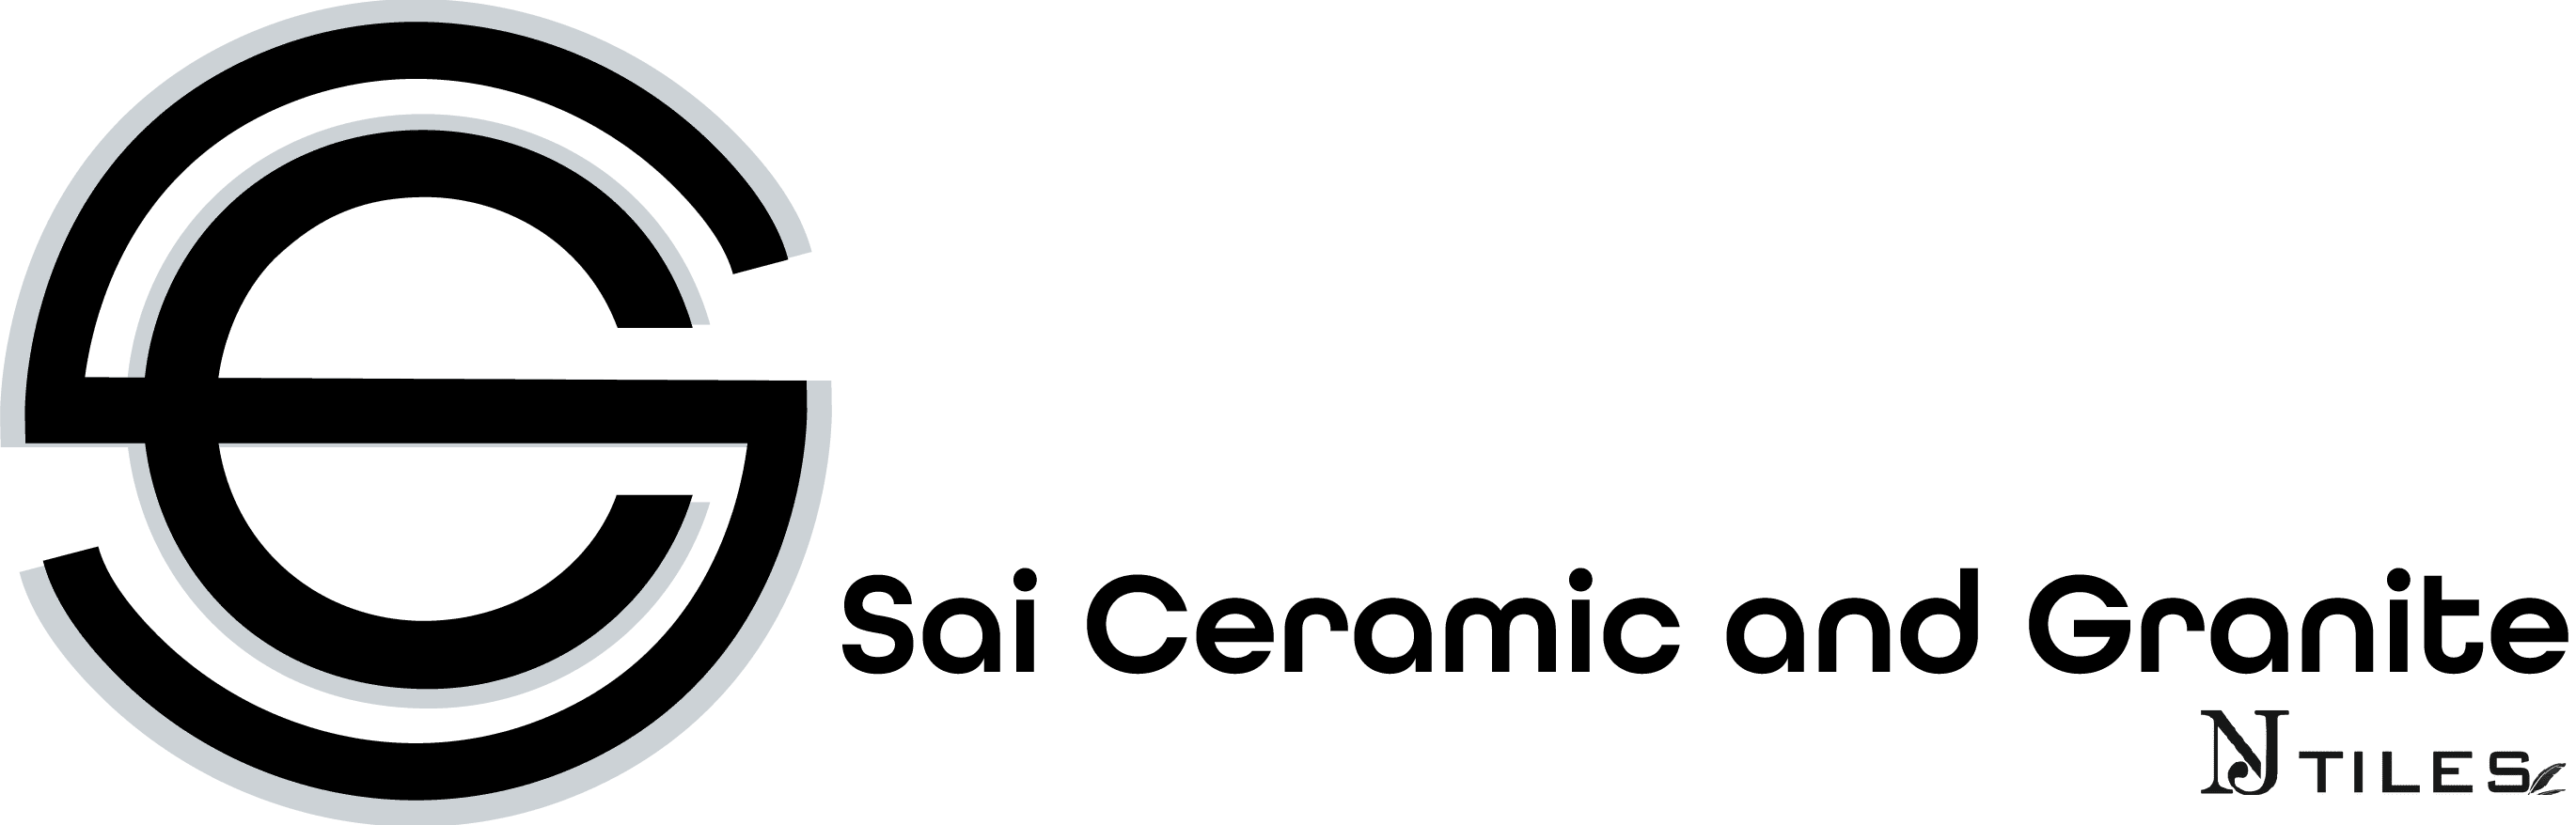 Saiceramicandgranite